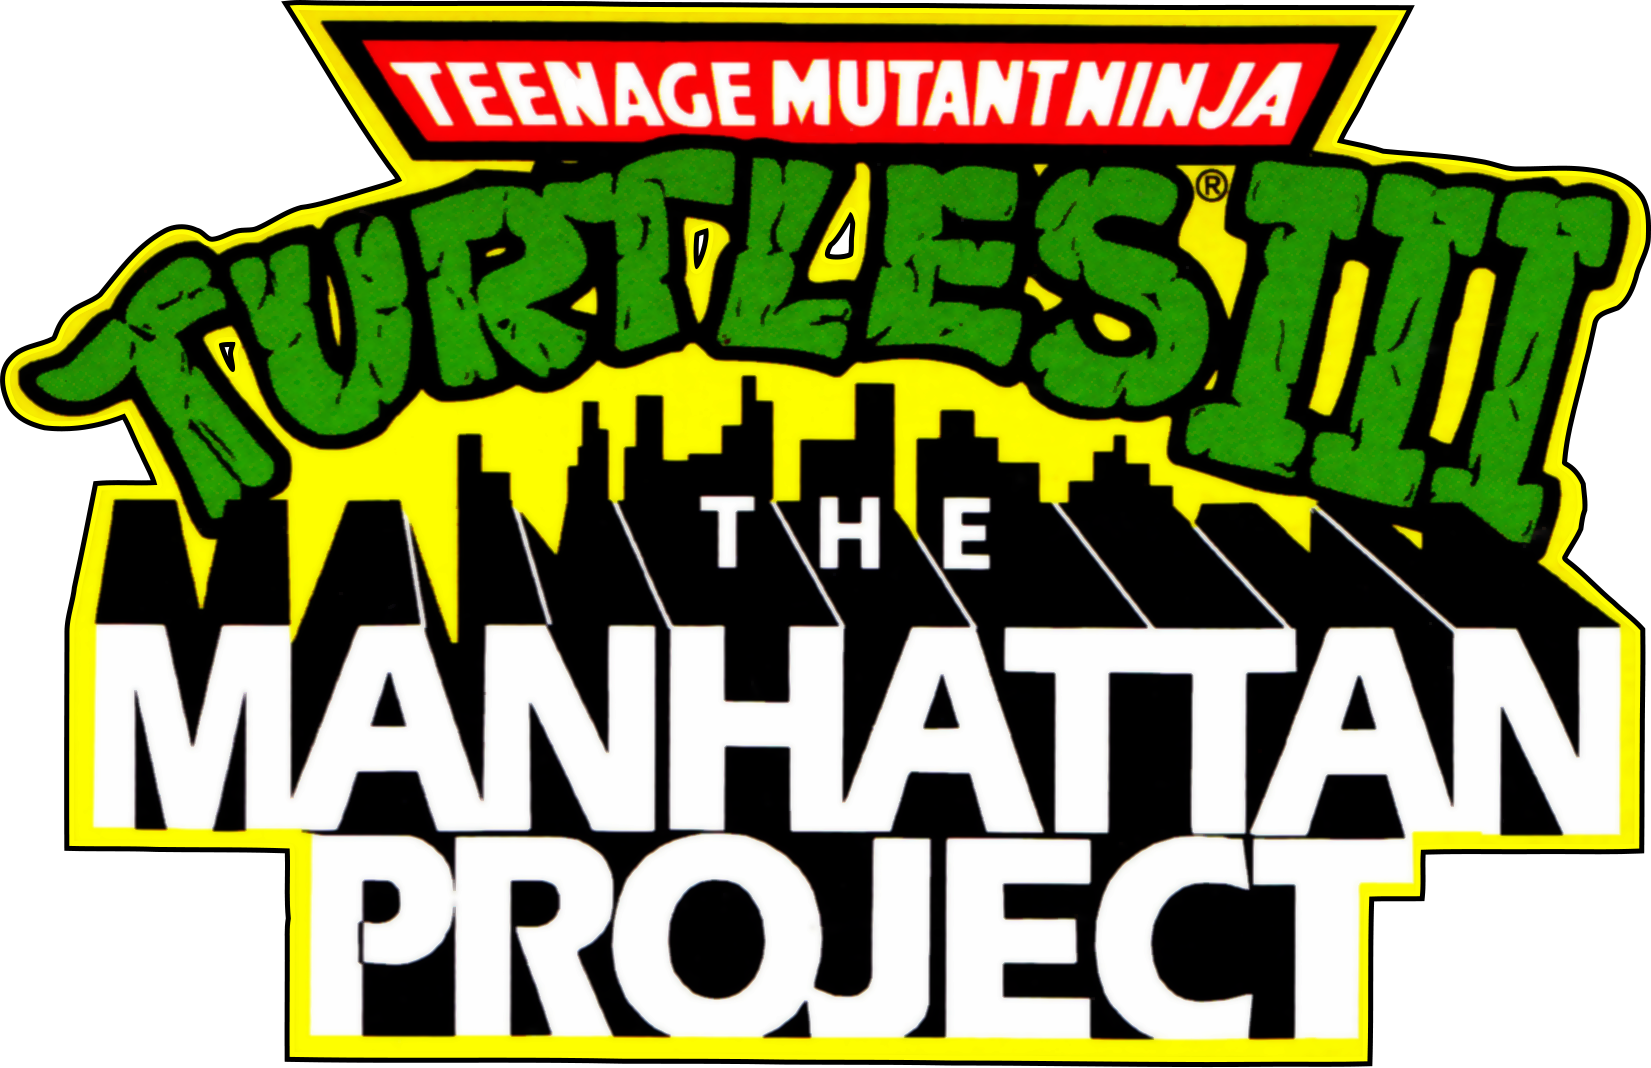 Tmnt 3 nes. TMNT 3 the Manhattan Project NES. TMNT 3 Manhattan Project. Teenage Mutant Ninja Turtles Manhattan Project. Teenage Mutant Ninja Turtles 3 the Manhattan Project.